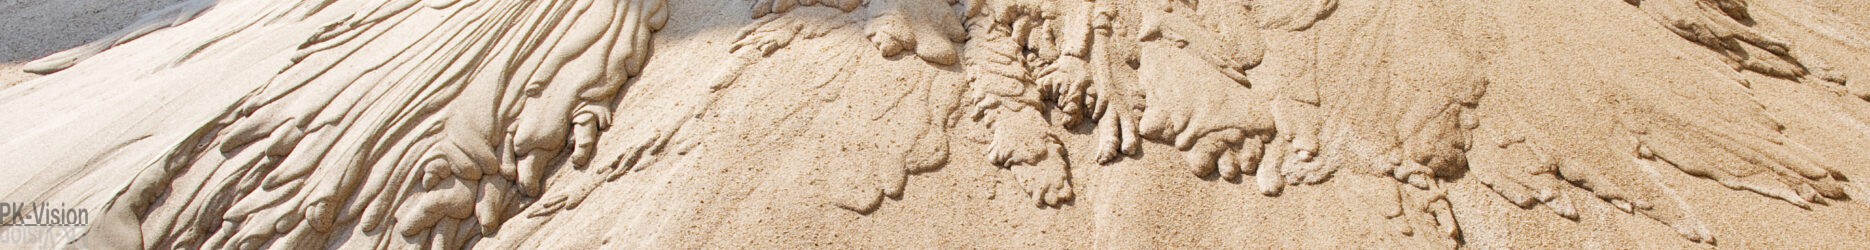 Sand-Spuren1